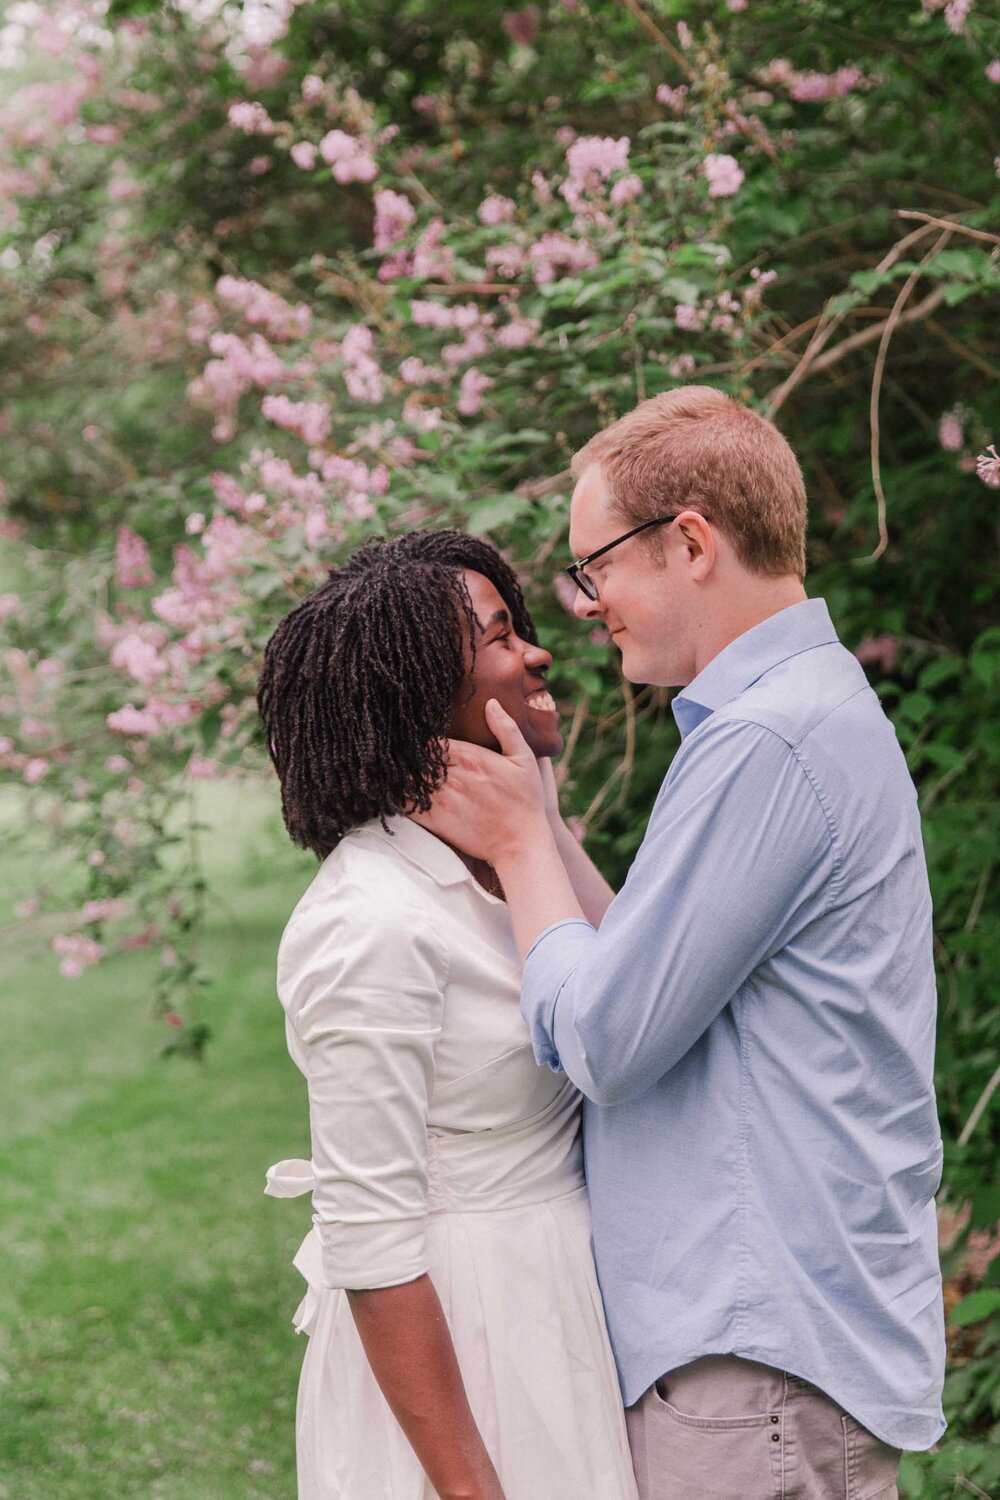 How to Style a Picnic Calgary Interracial Family Couple Photographer